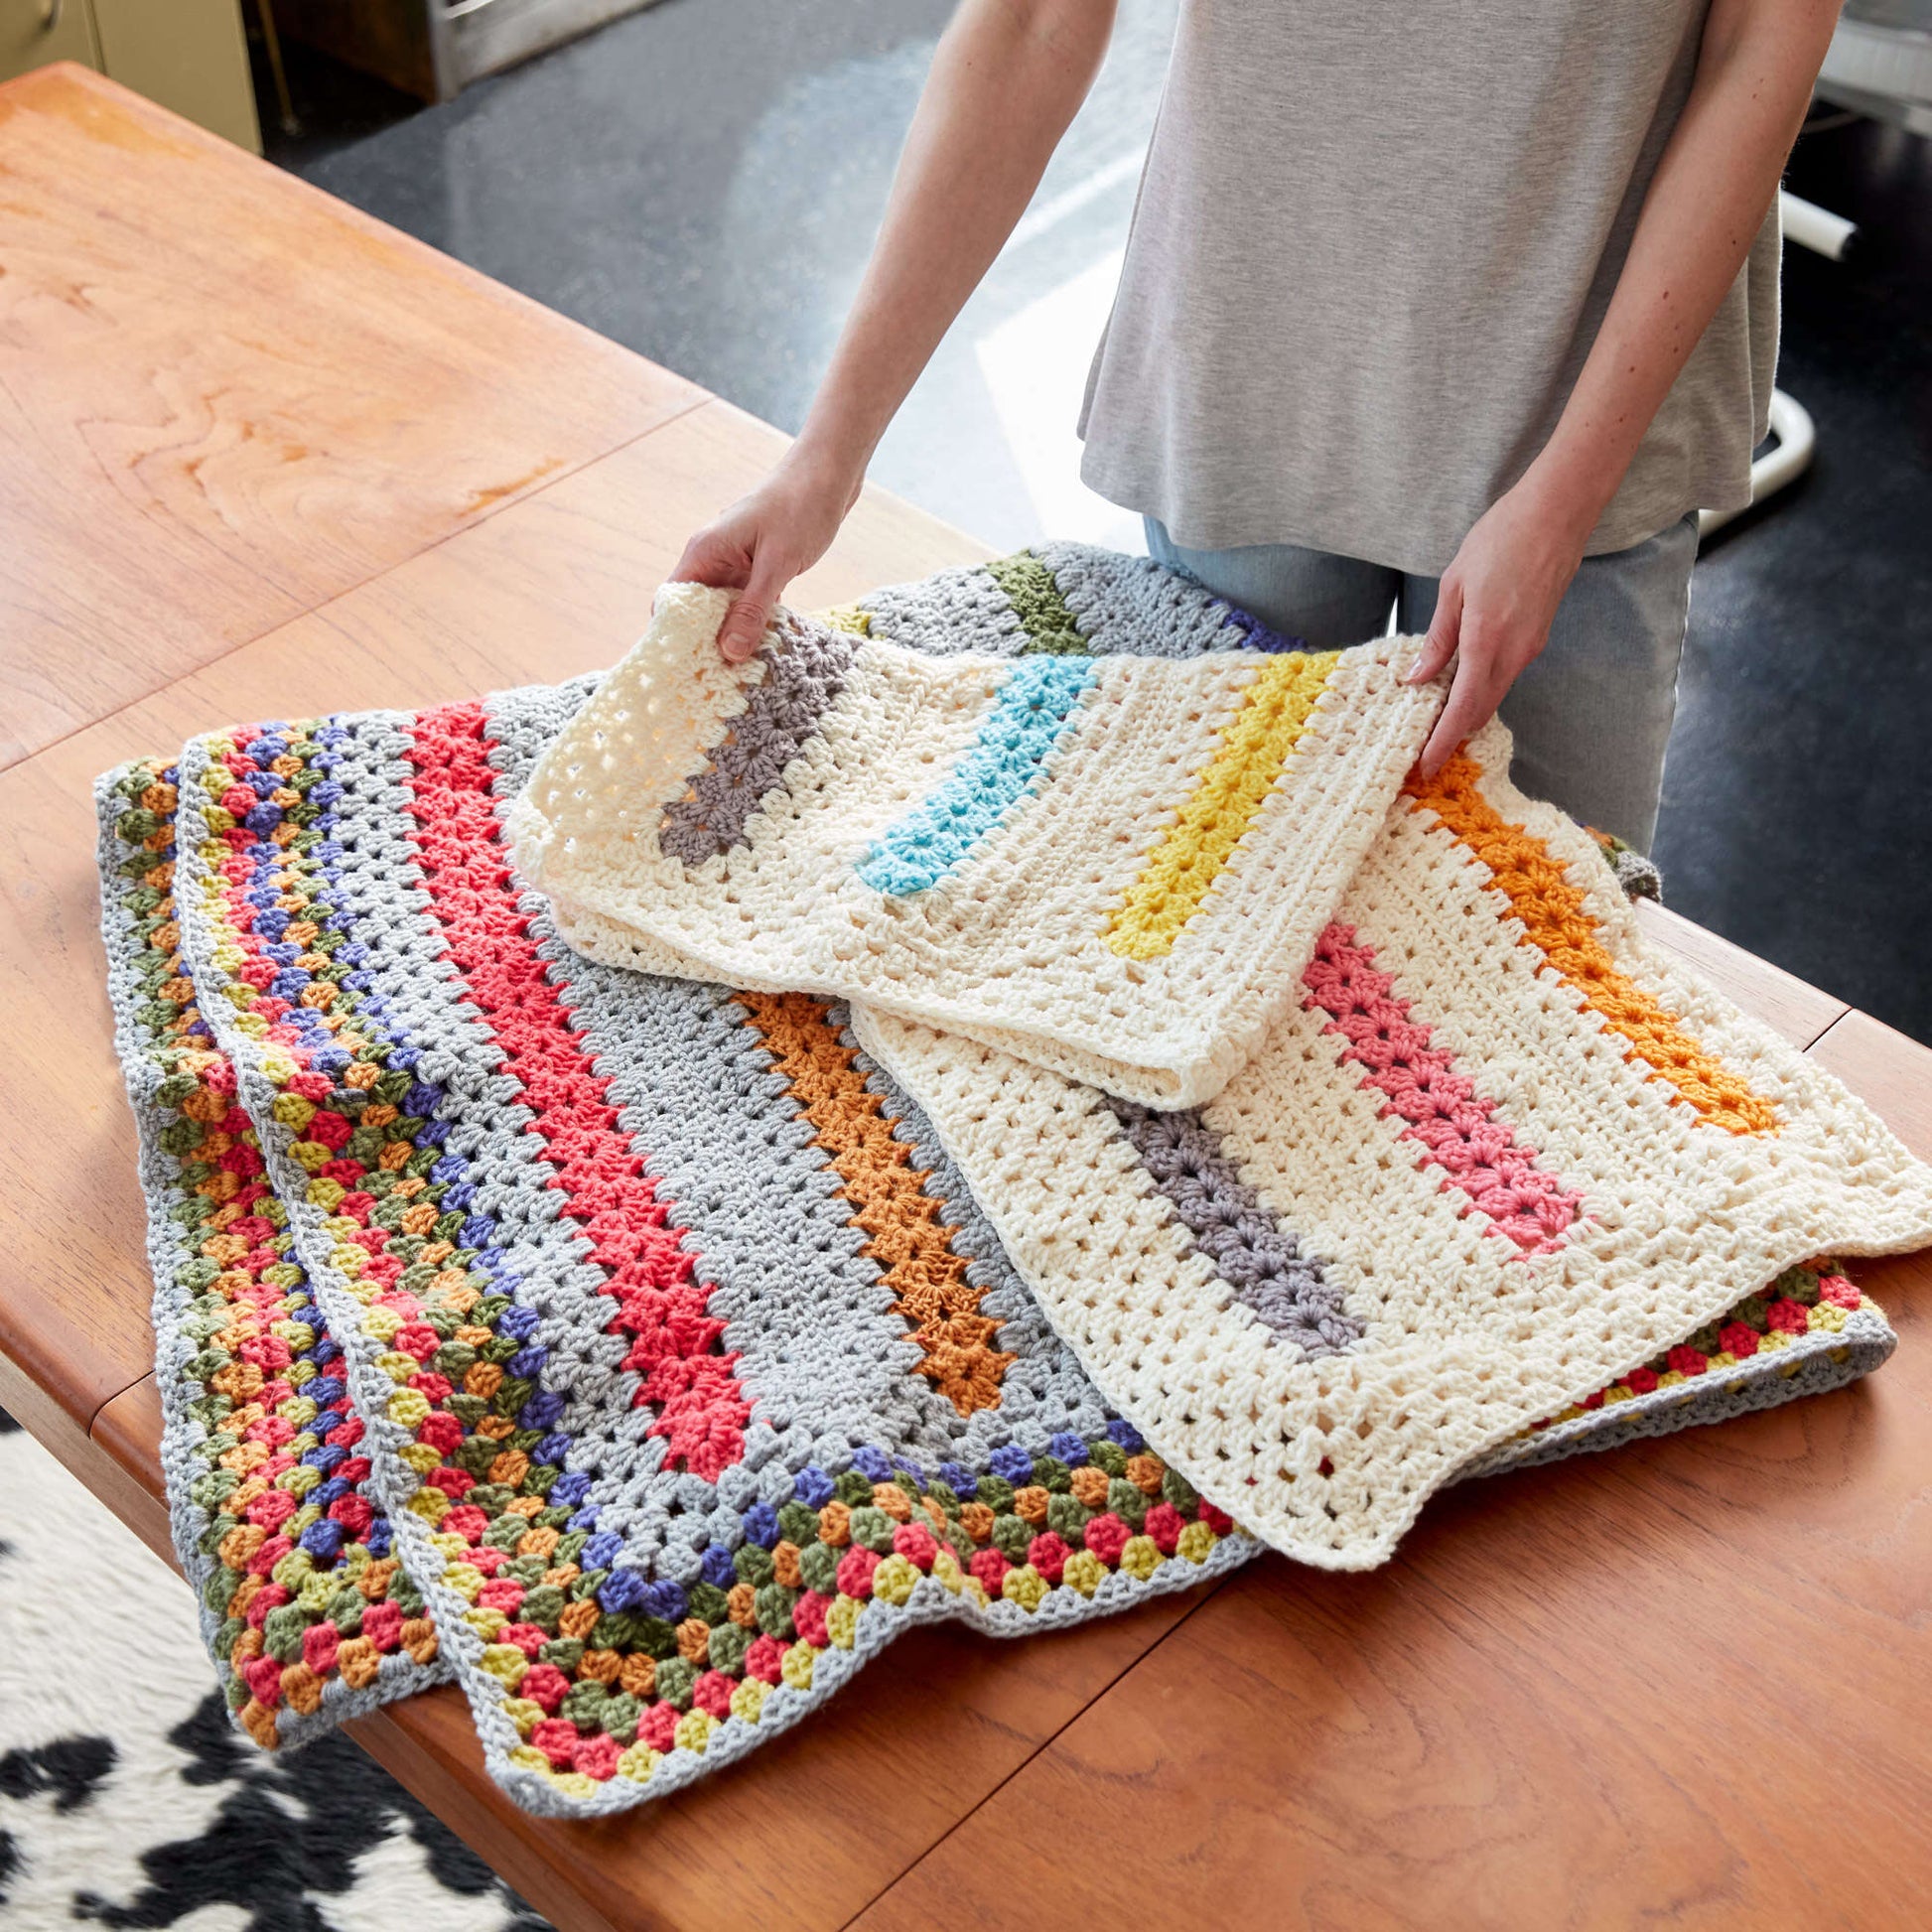 Bernat Pop-A-Minute Crochet Baby Blanket Crochet Blanket made in Bernat Super Value yarn